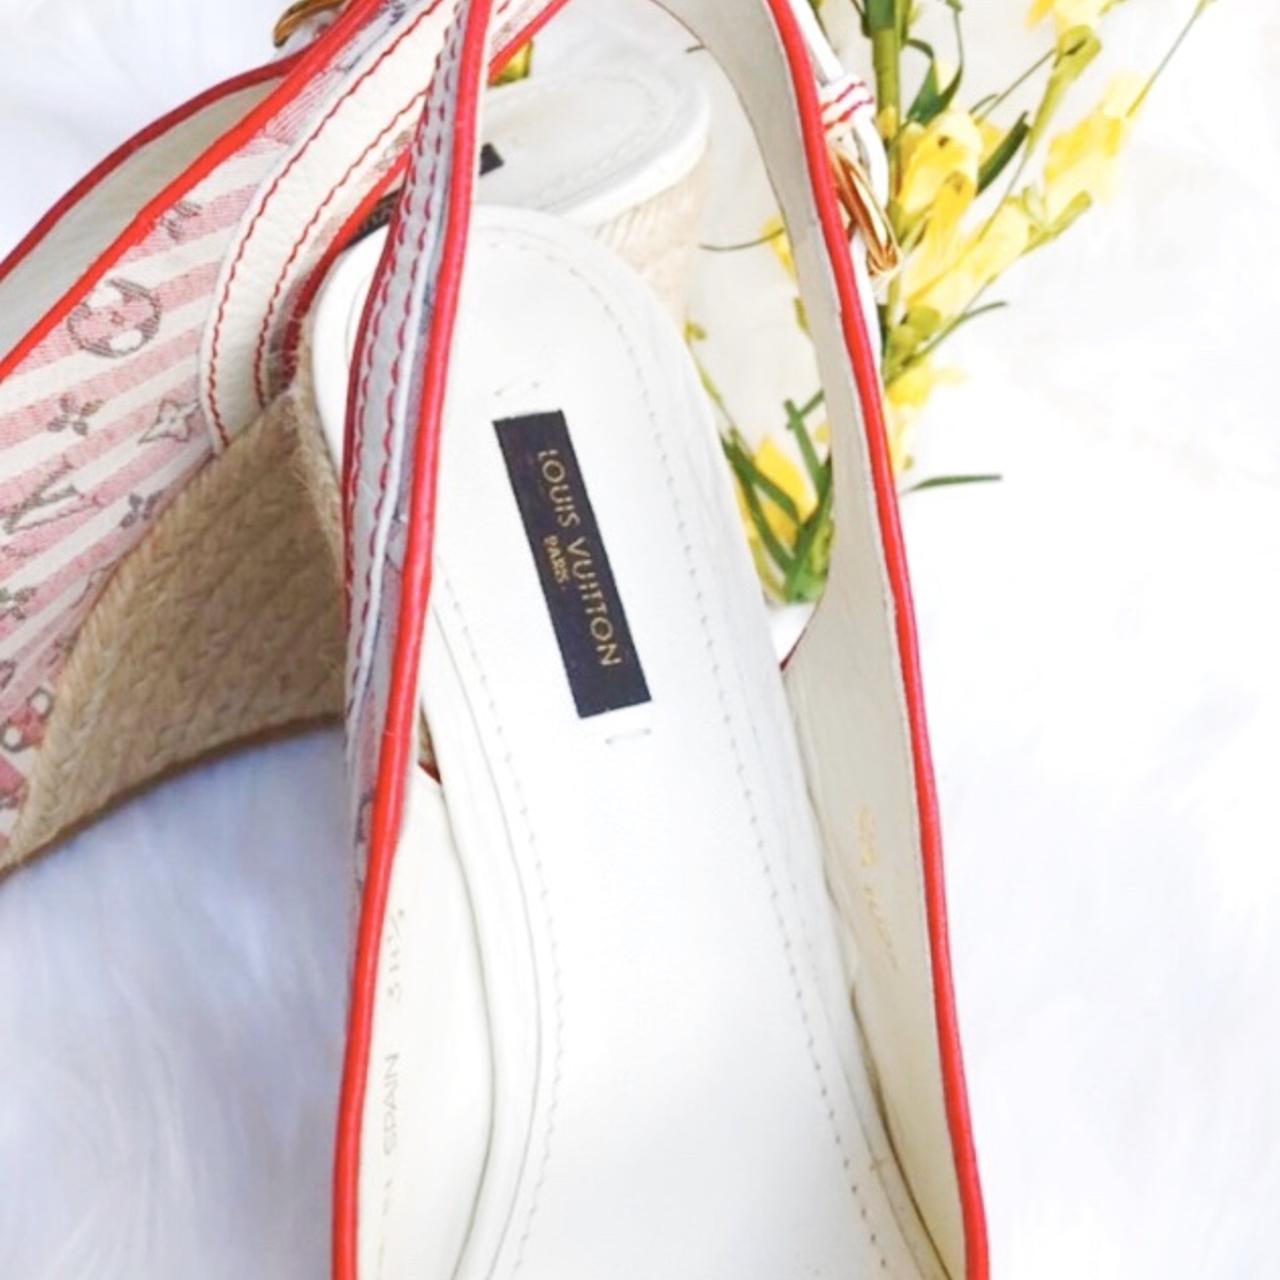 Louis Vuitton denim edition wedge heels - Depop